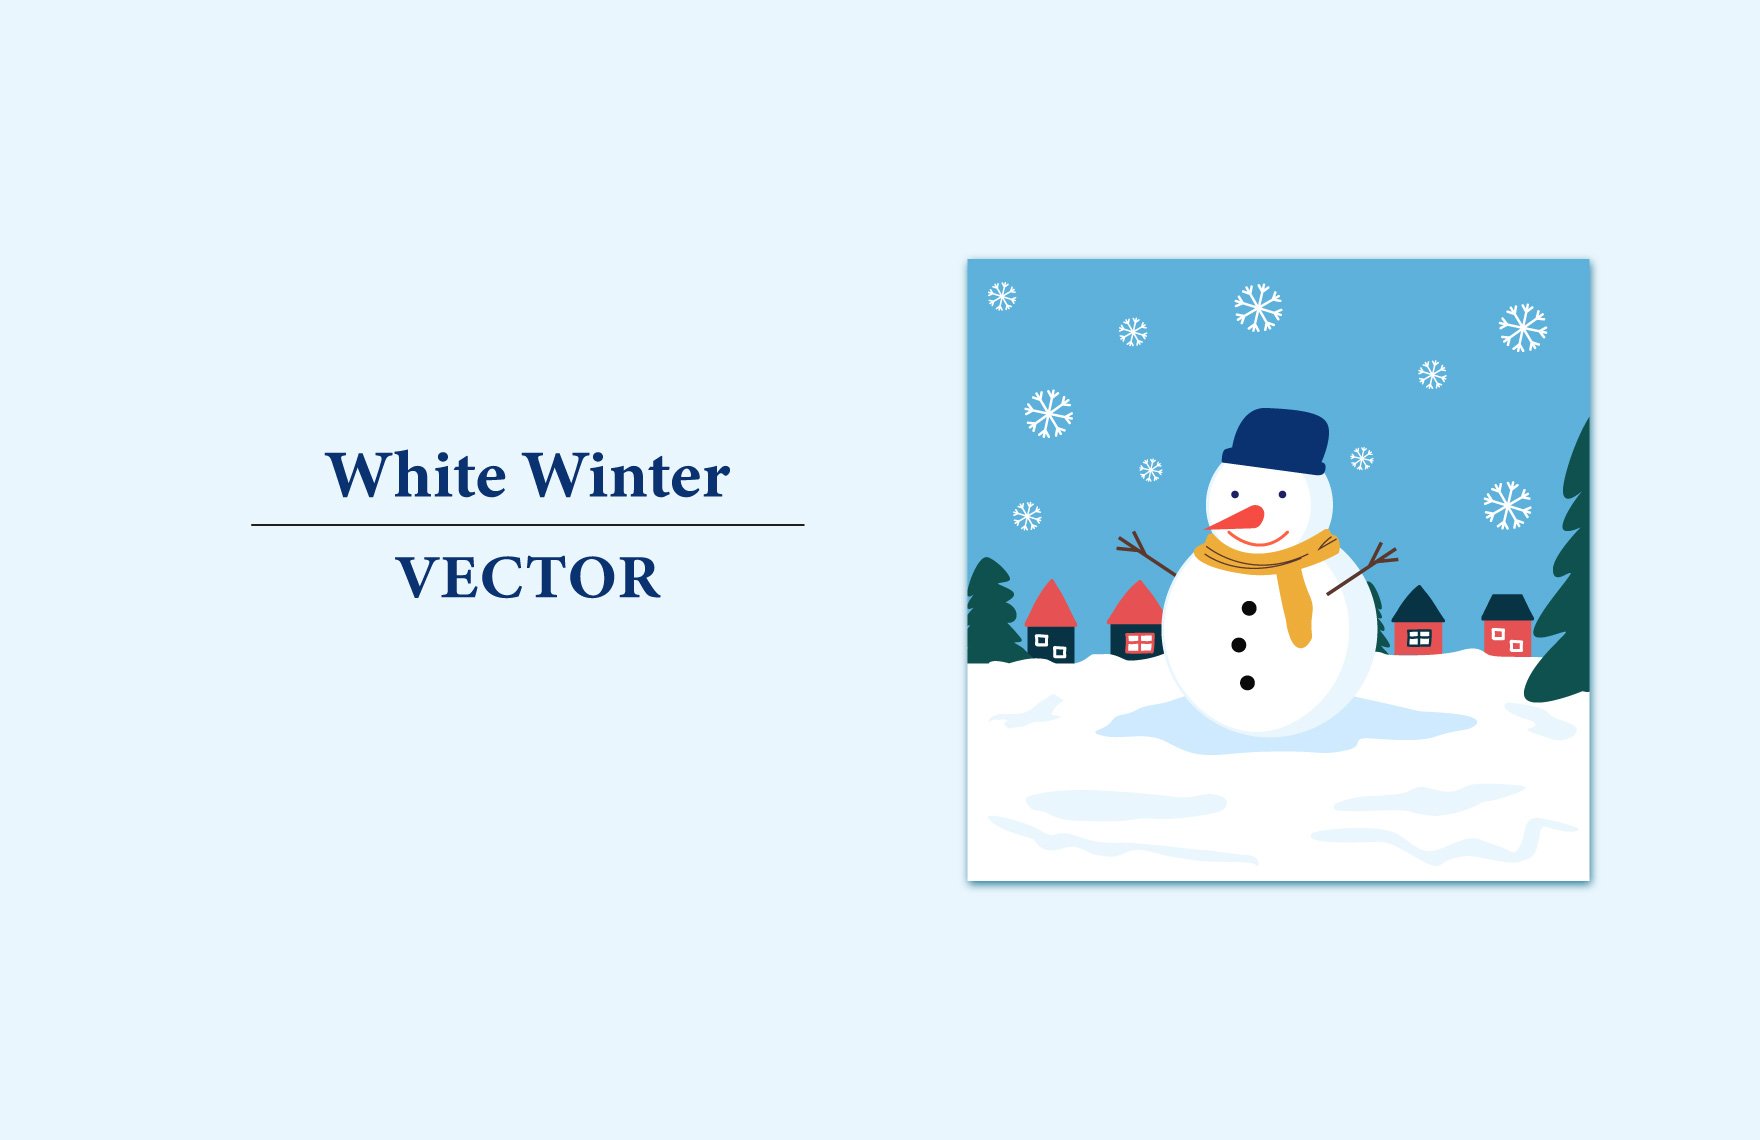 Free White Winter Vector in Illustrator, PSD, JPG, PNG